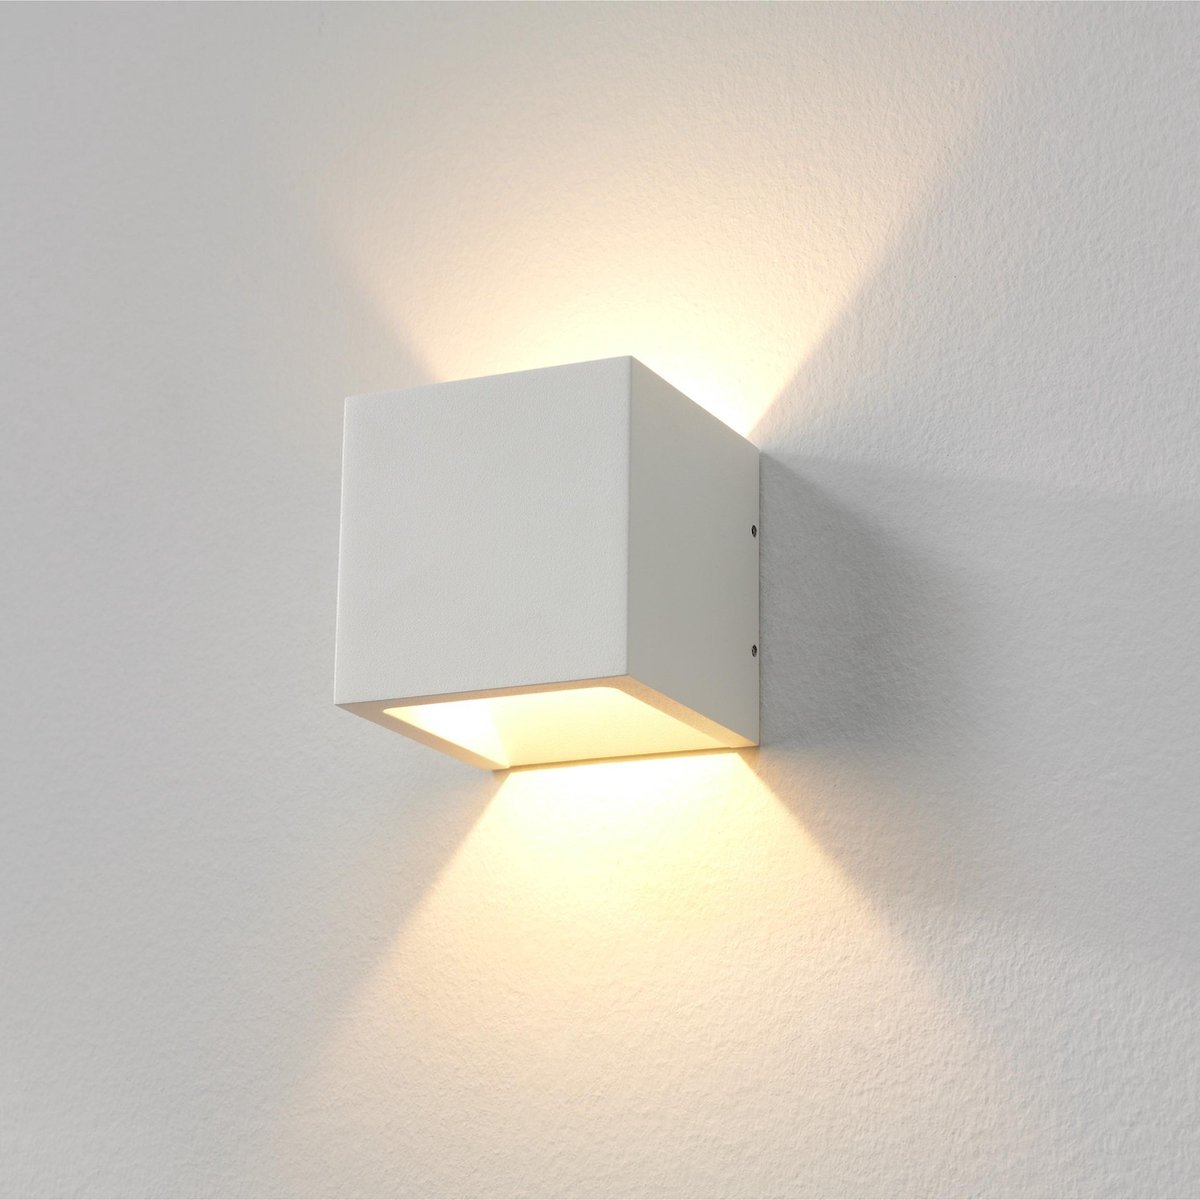 Artdelight - Wandlamp Cube - Wit - LED 6W 2700K - IP54 - Dimbaar